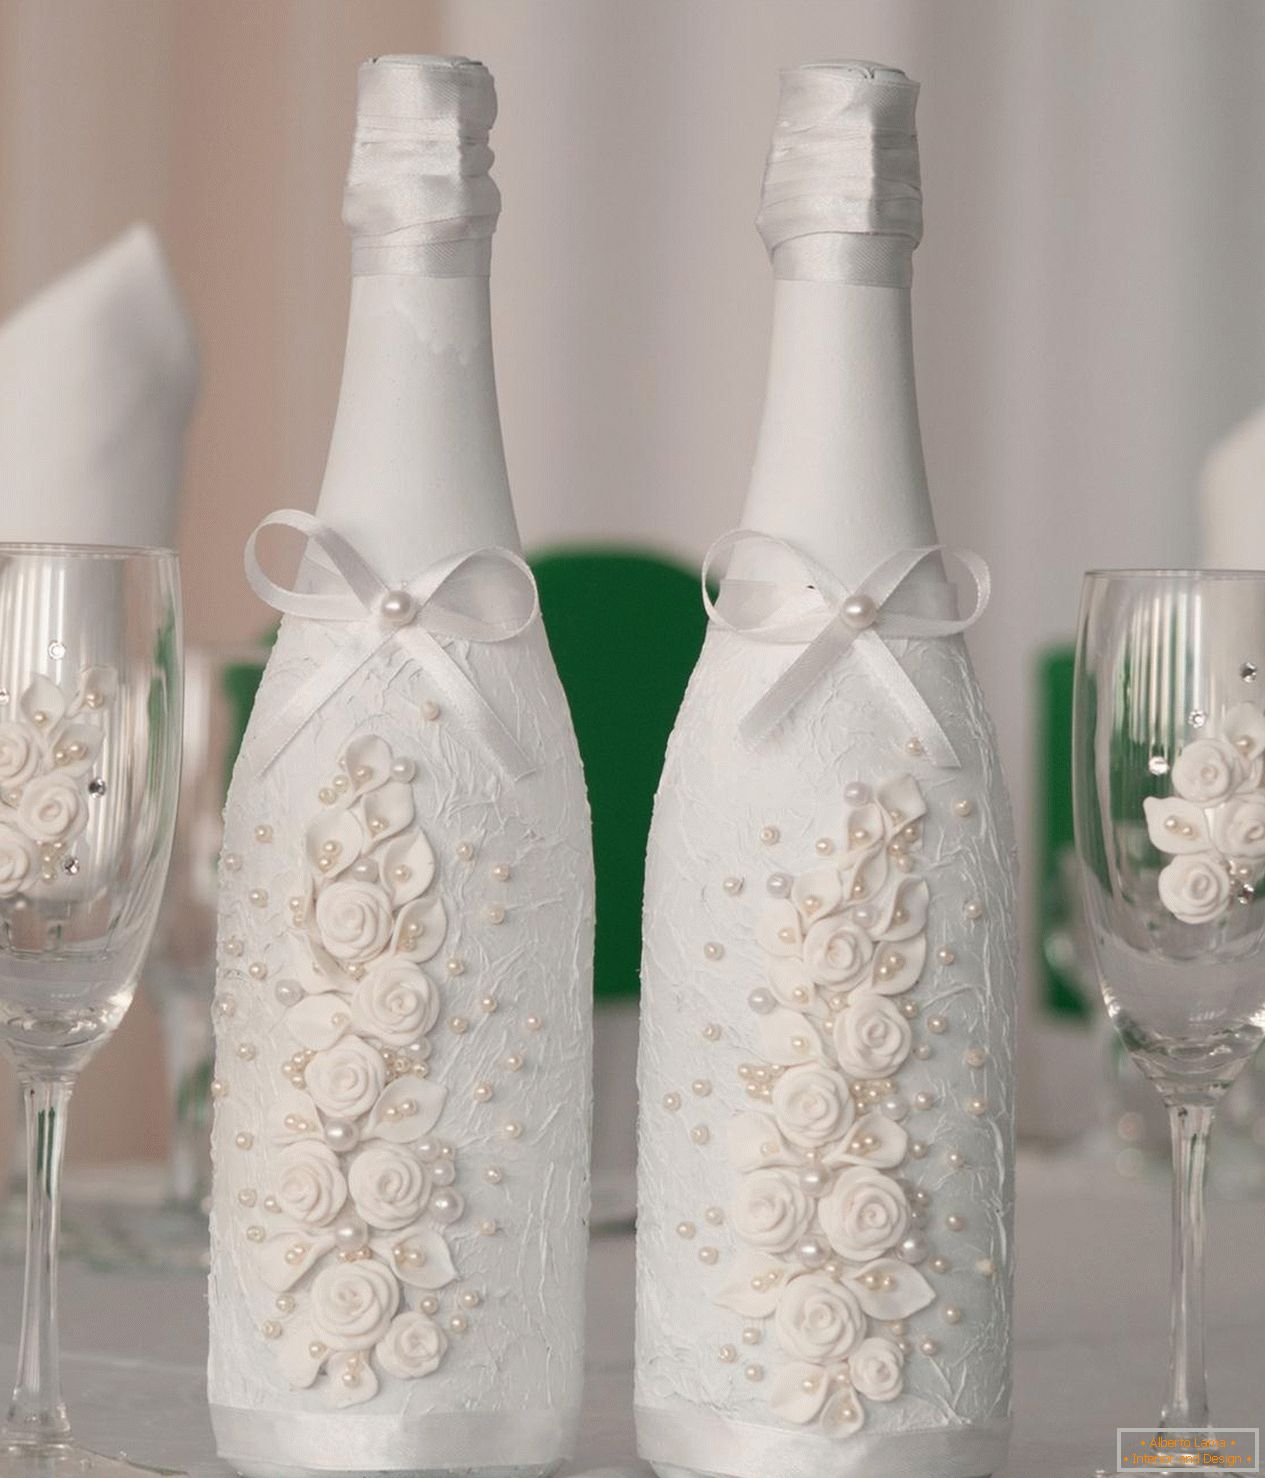 Design elegante de garrafas e copos